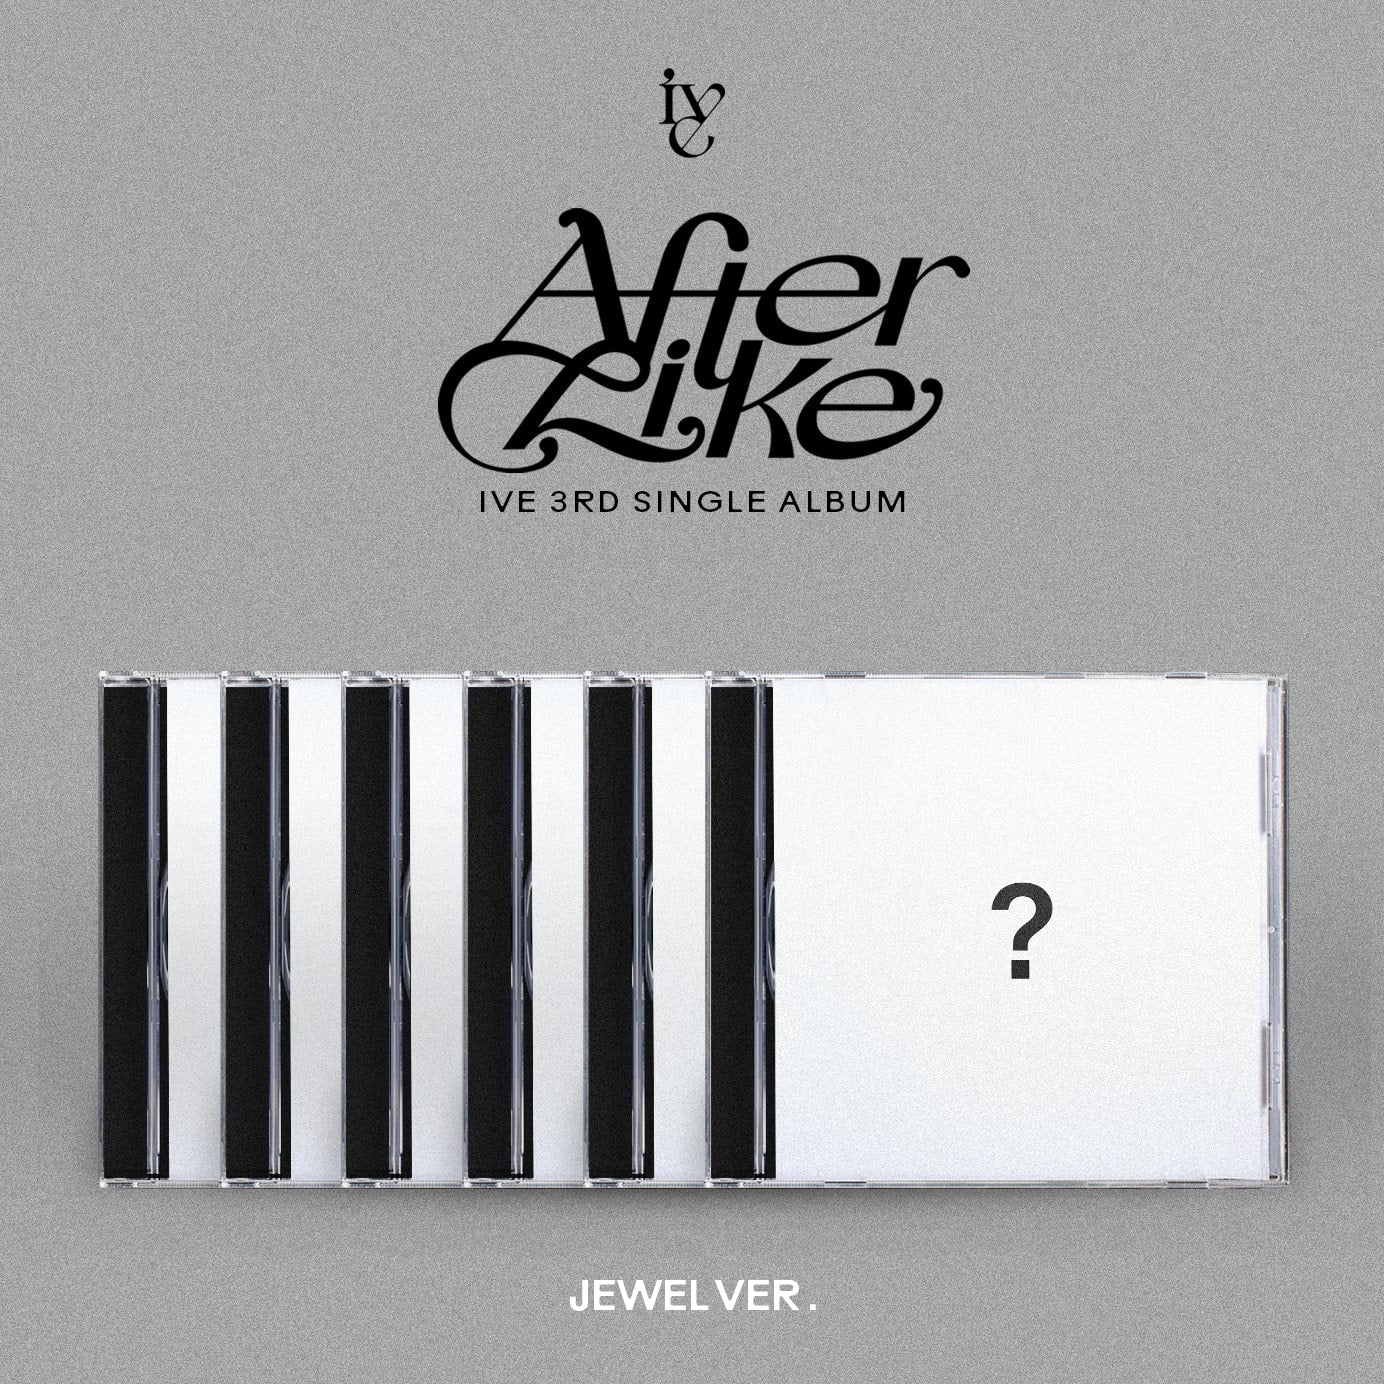 IVE Single Album Vol. 3 - After Like (Jewel Ver.) (Limited Edition) (Random)